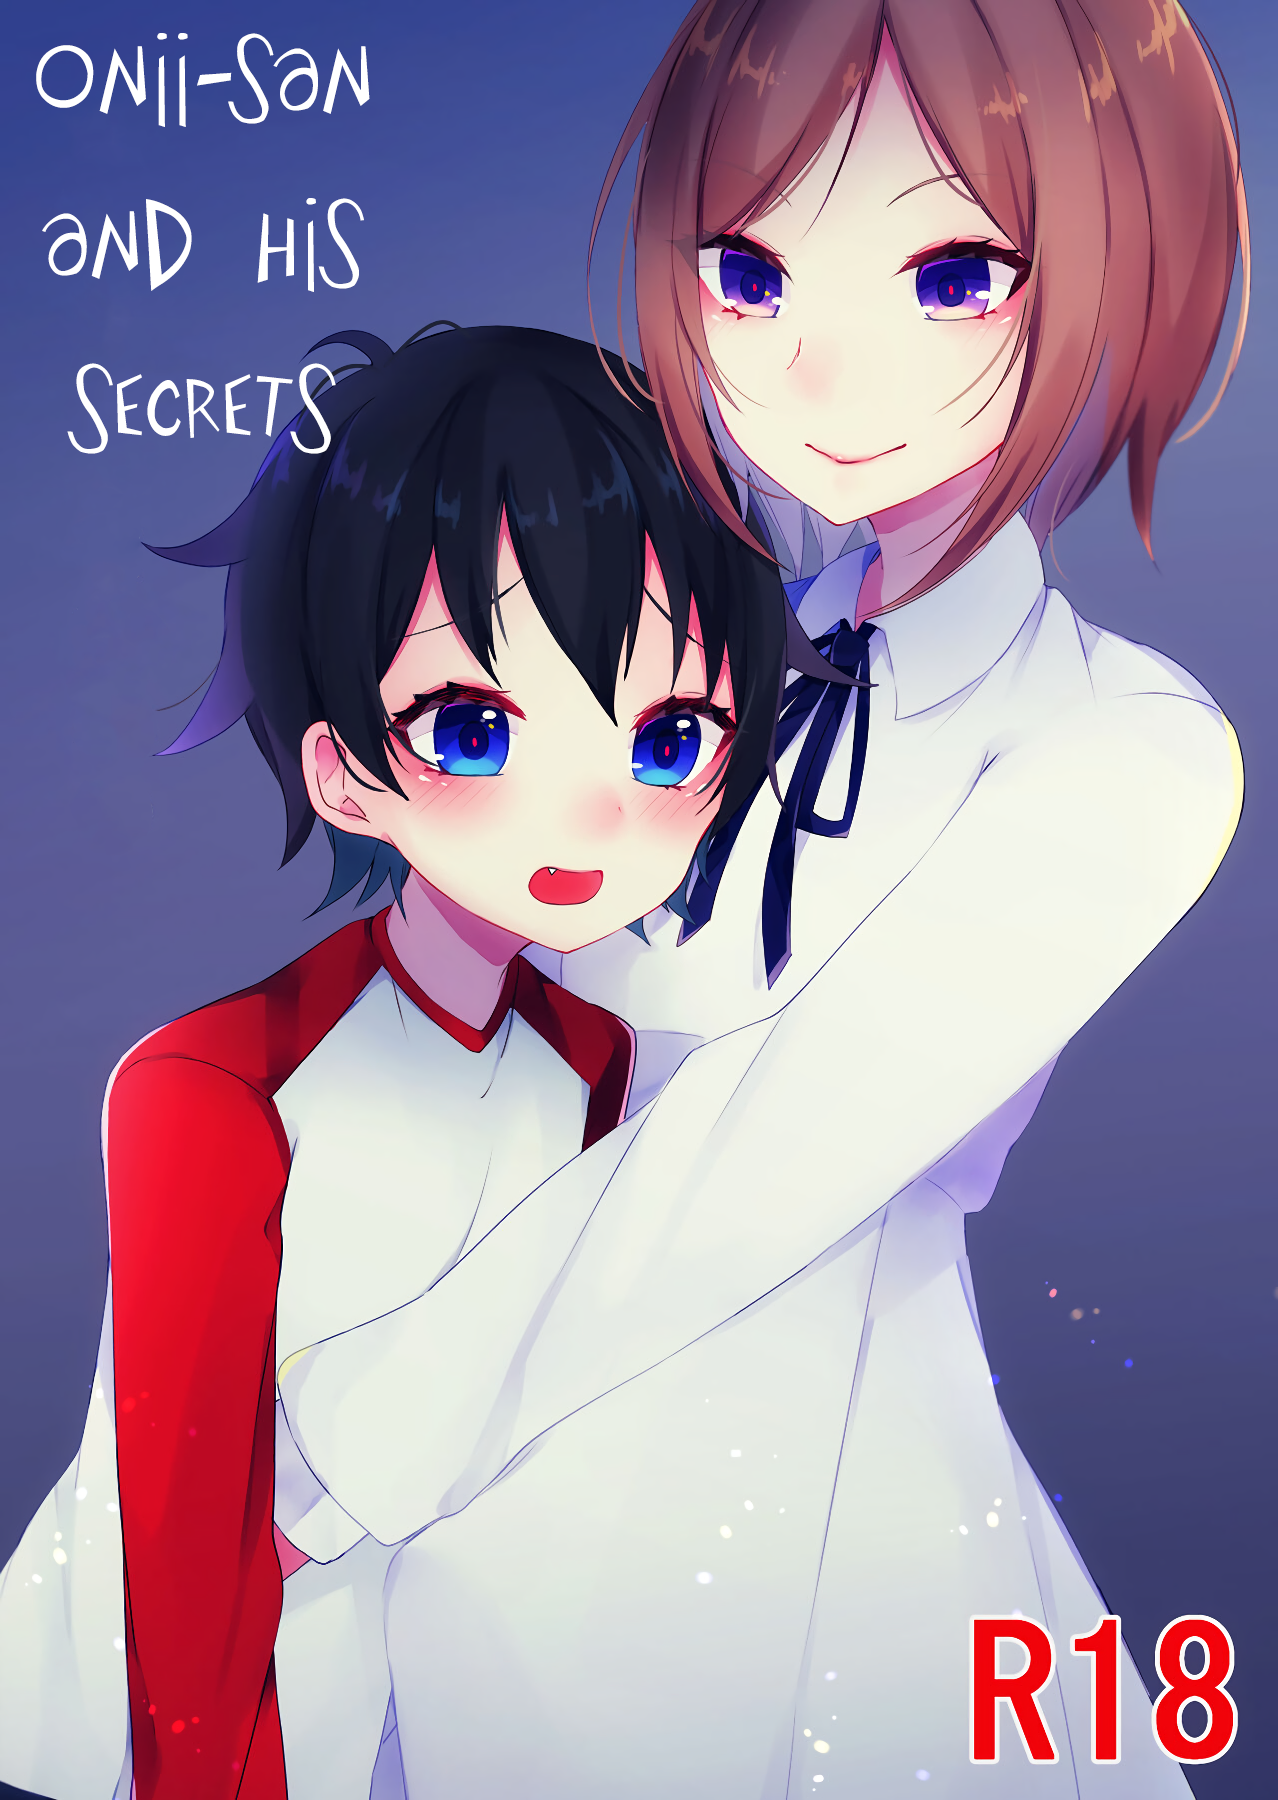 Onii-san and his Secrets manga